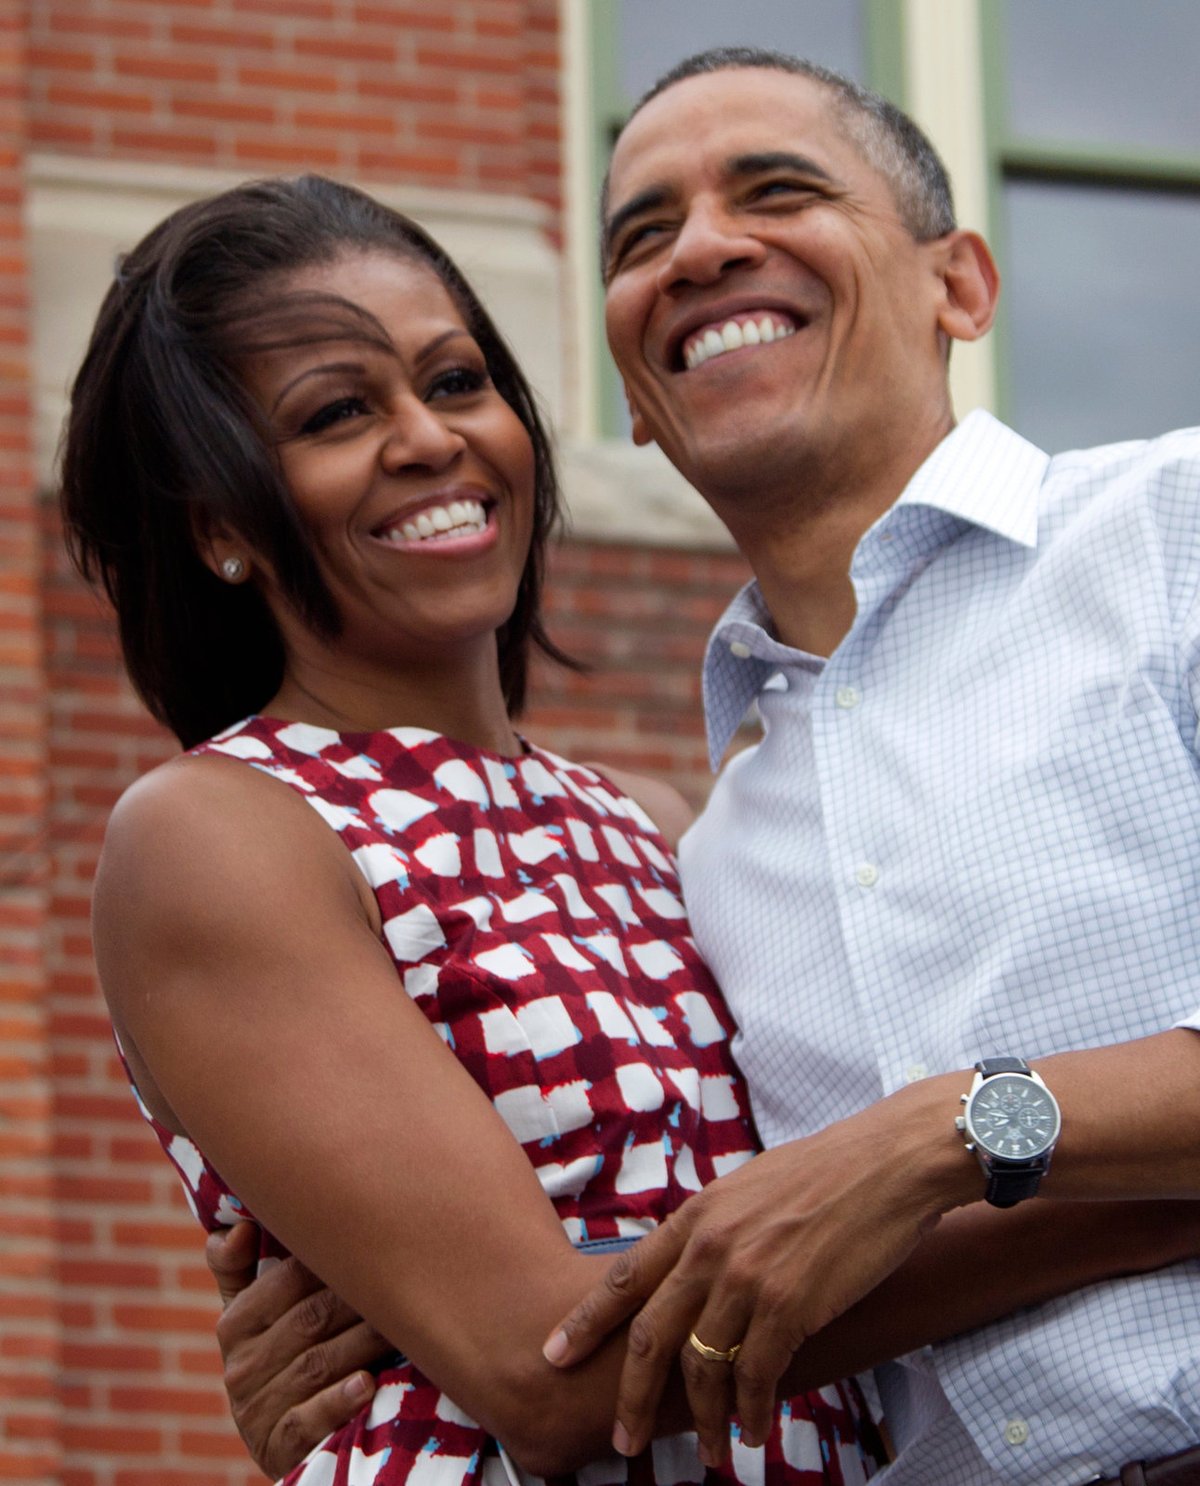 Michelle a Barack Obamovi